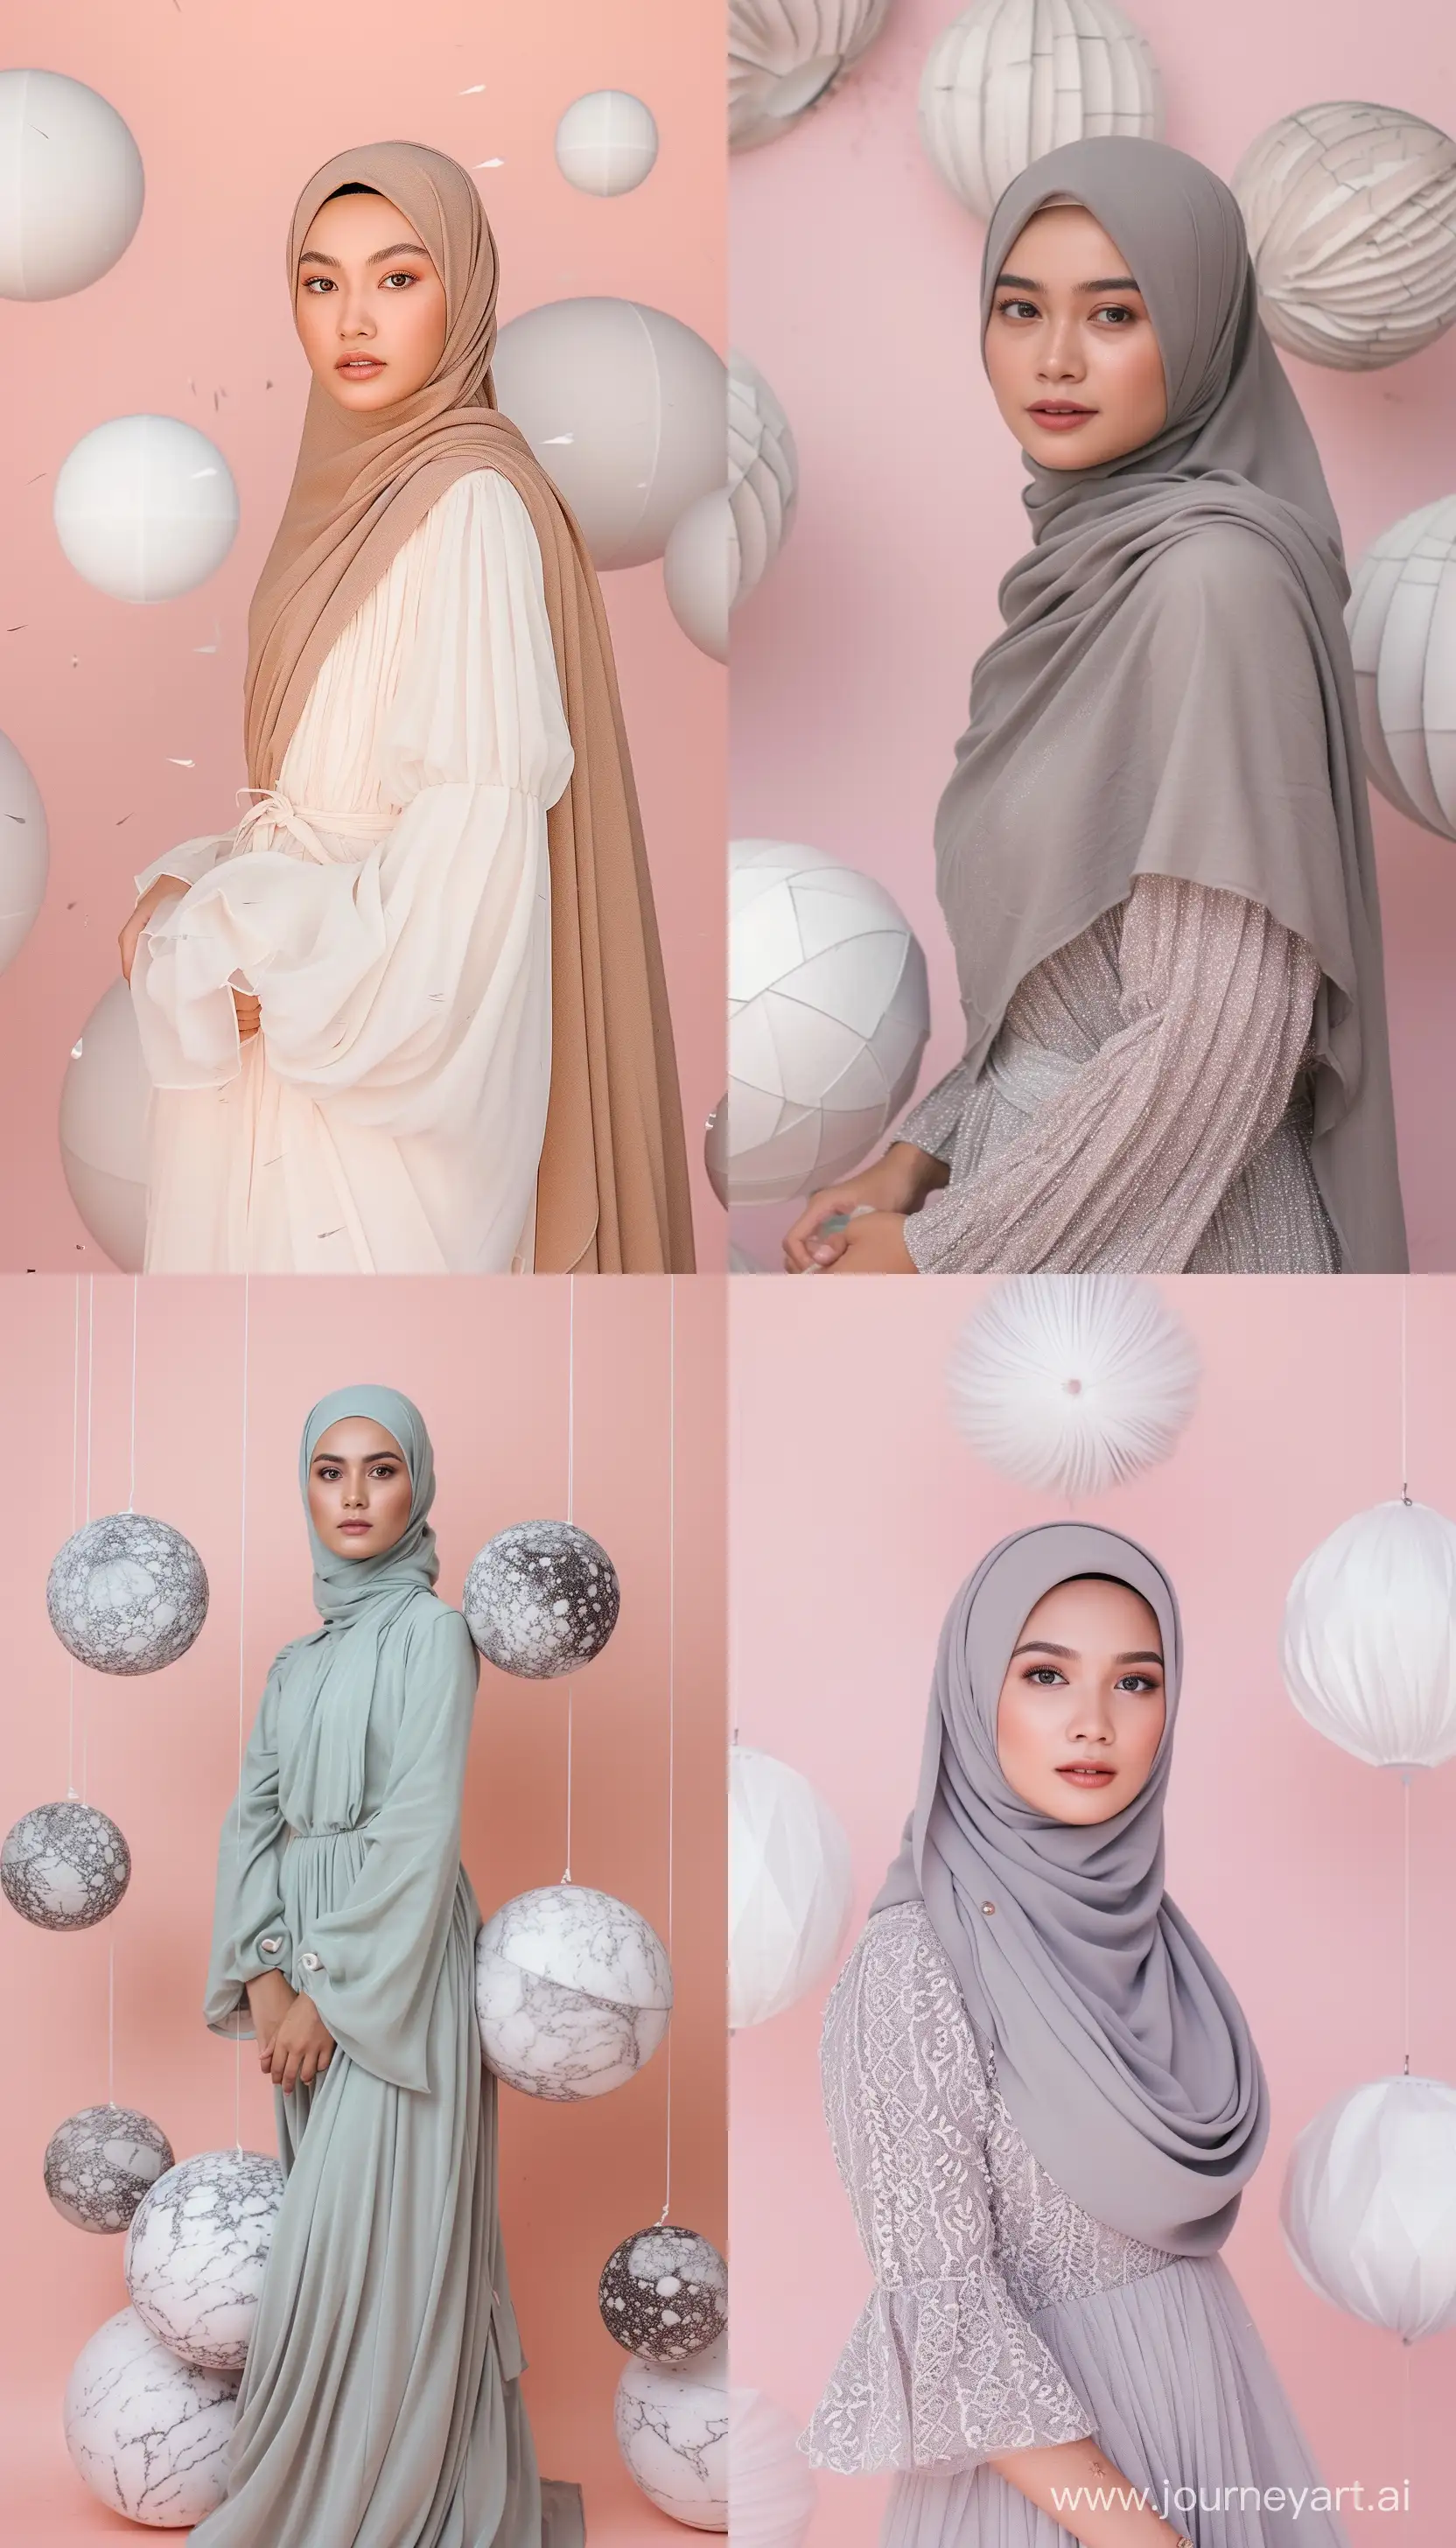 Elegant-Indonesian-Woman-in-Hijab-Dress-Amidst-Artistic-Spheres